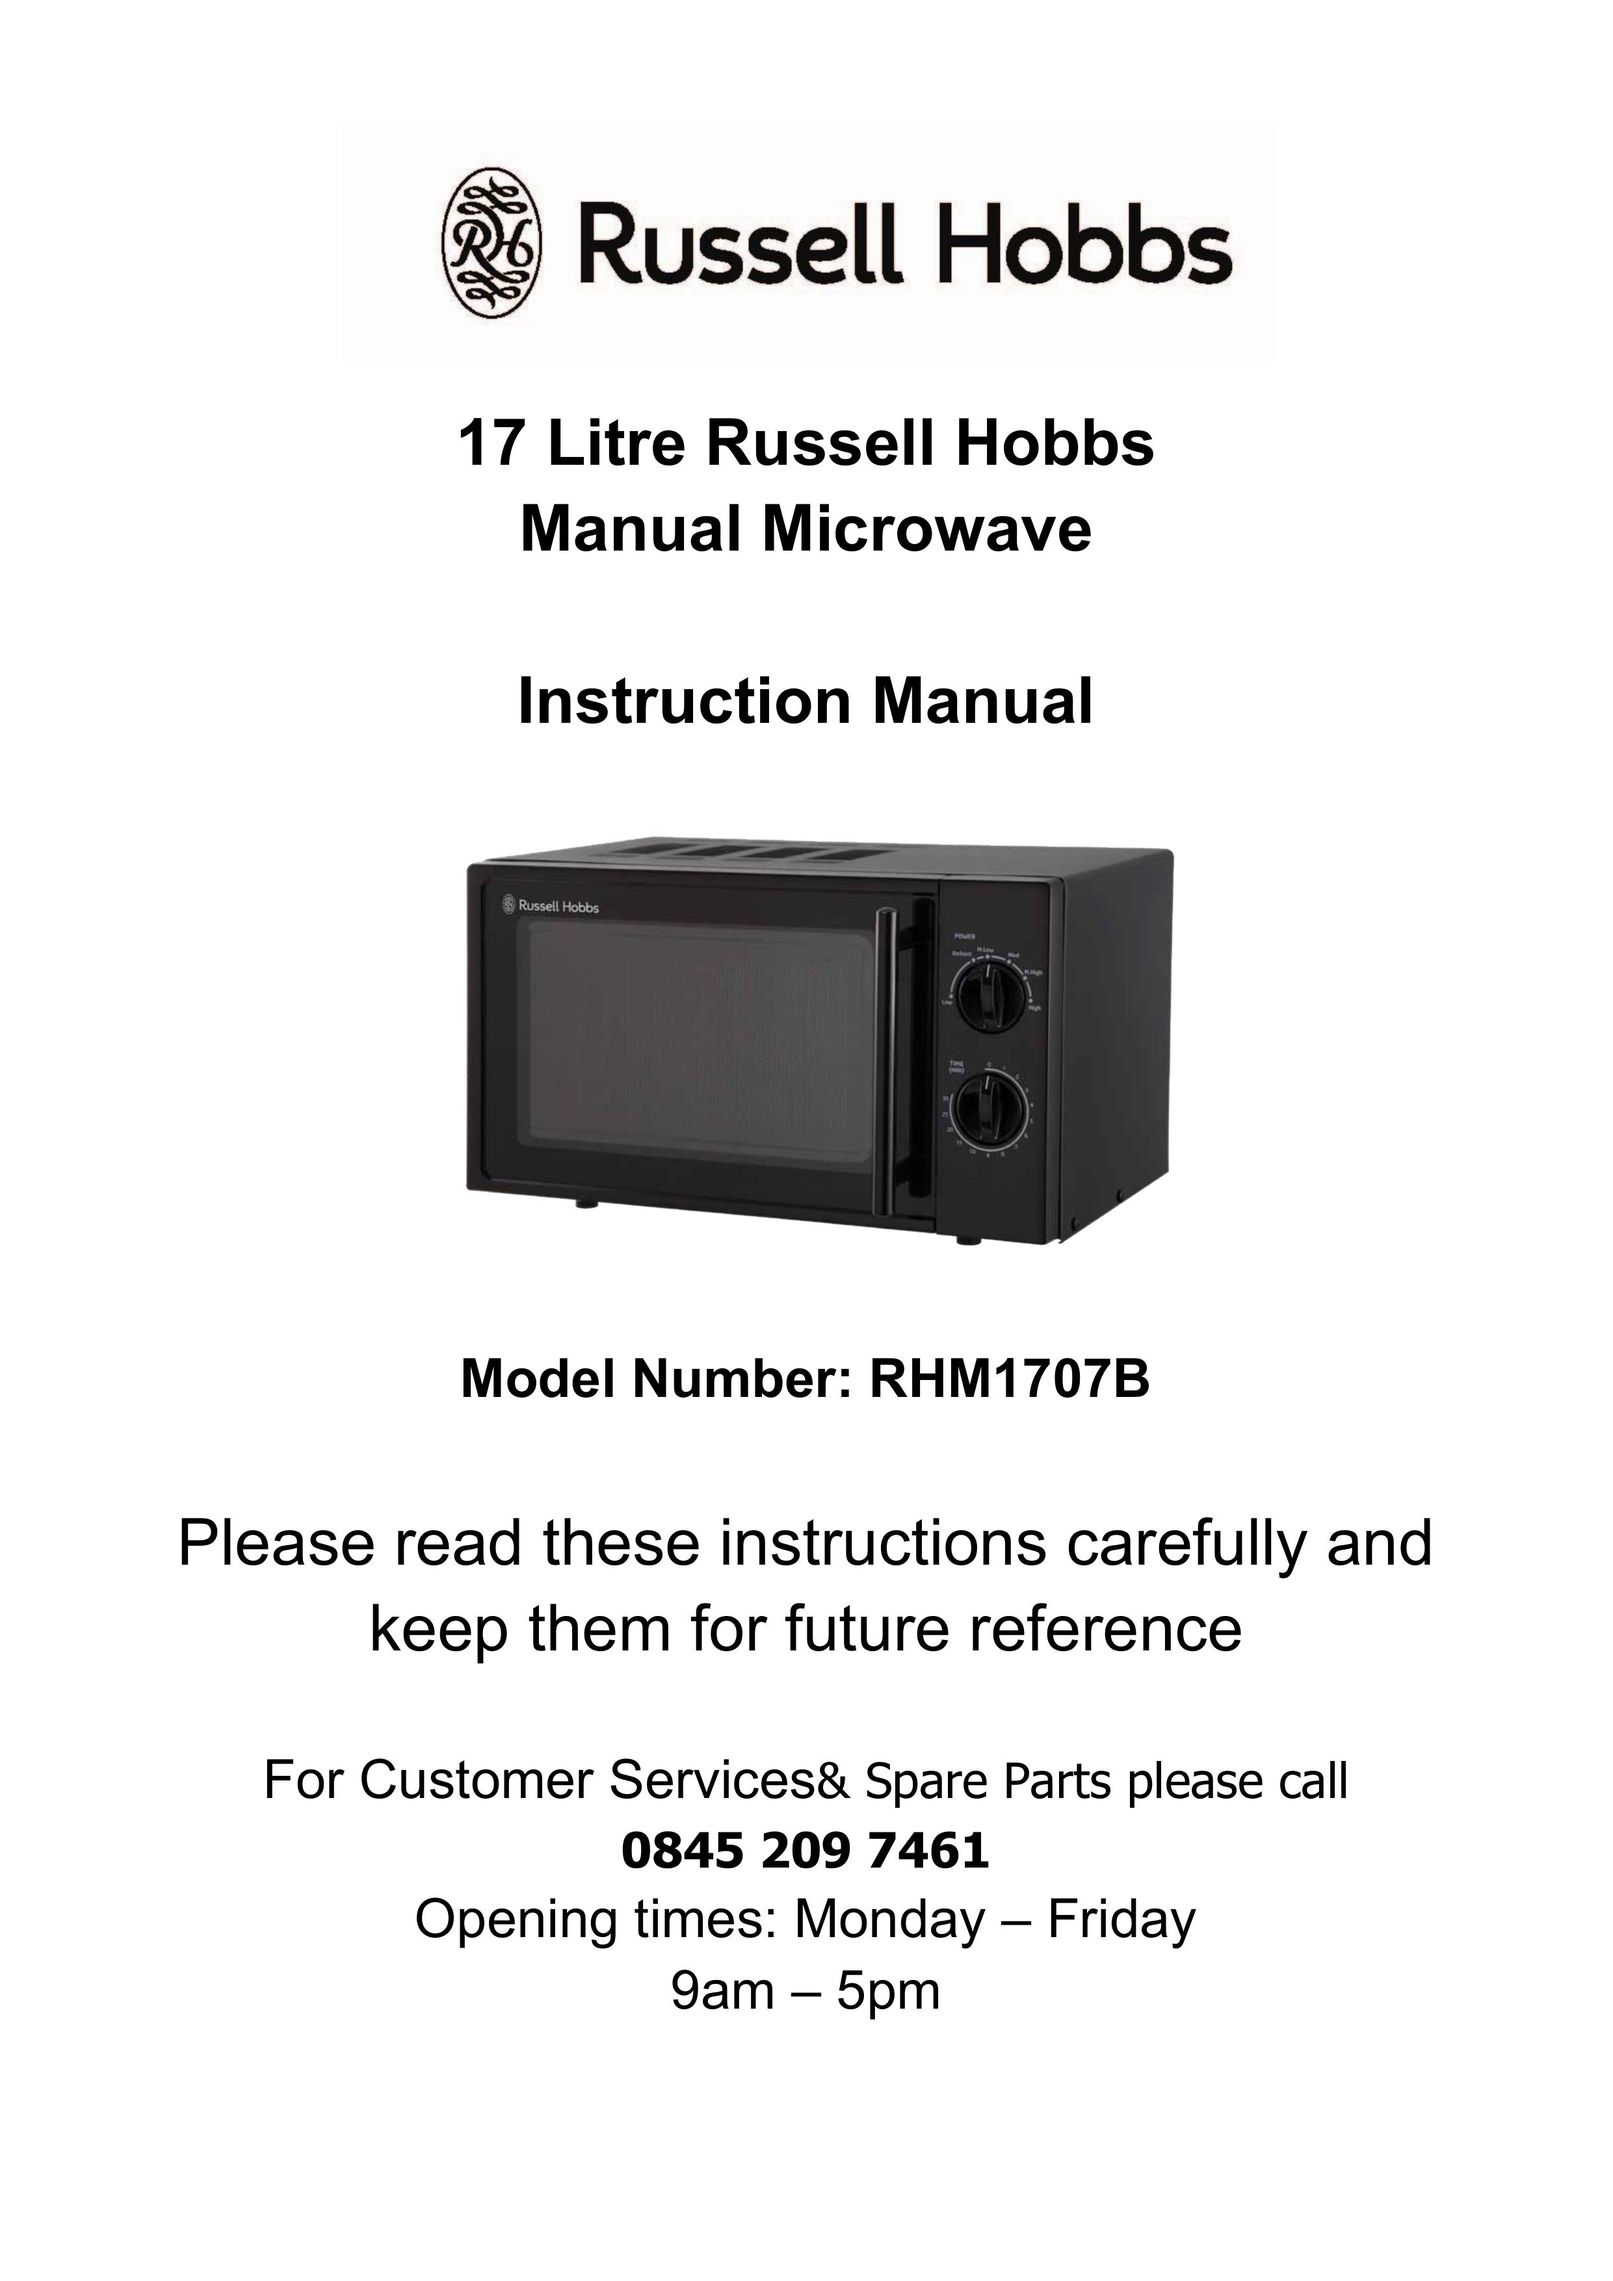 Russell Hobbs RHM1707B Microwave Oven User Manual